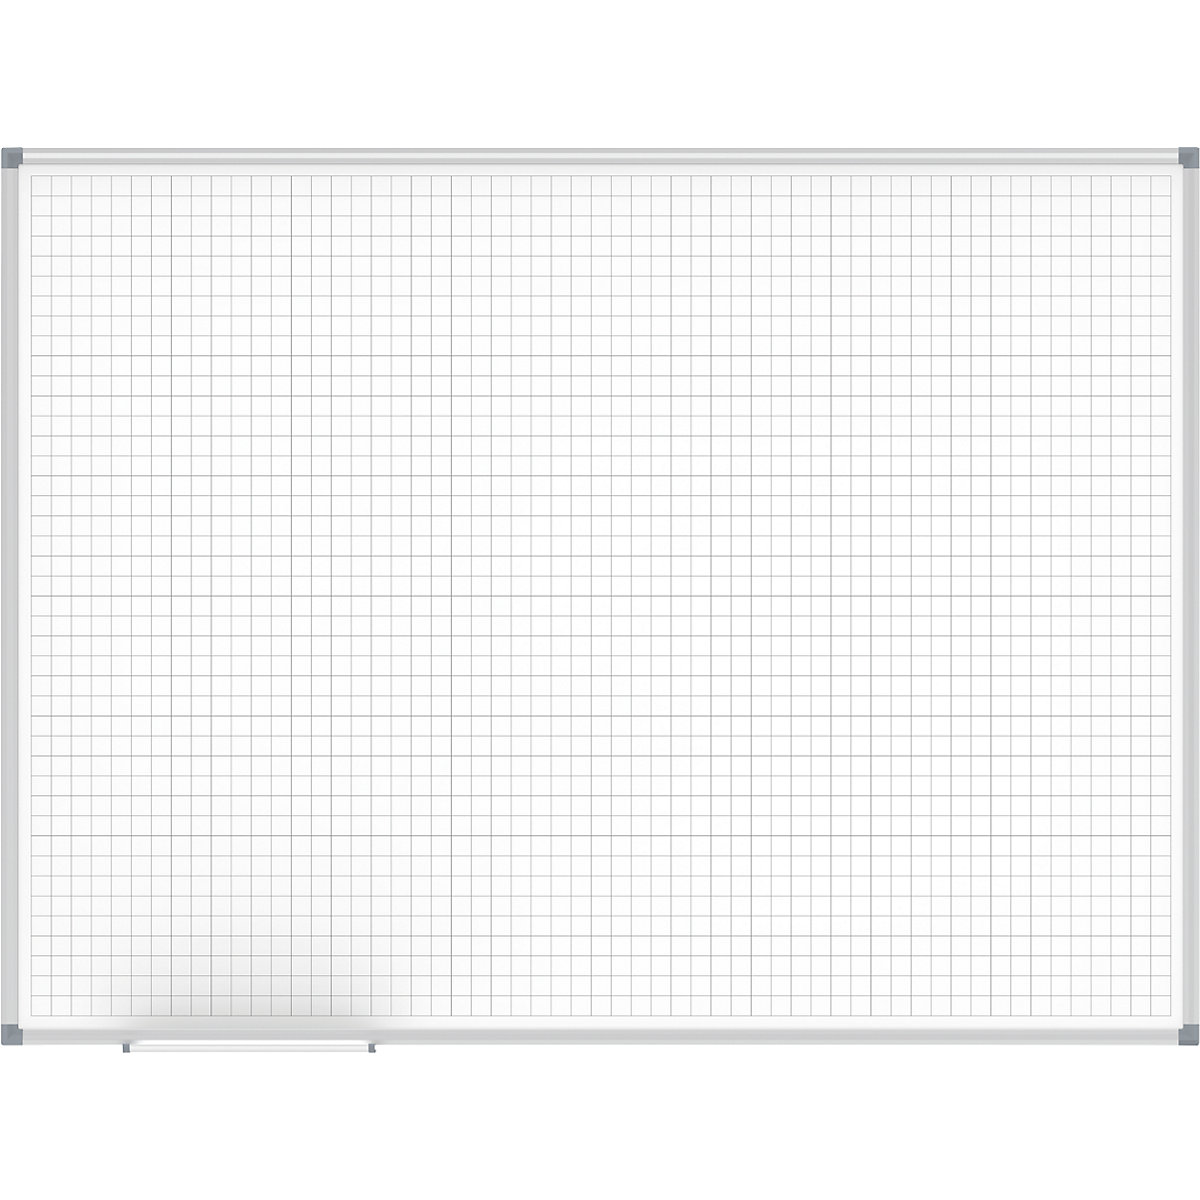 Tablă cu caroiaj MAULstandard, albă – MAUL, caroiaj 20 x 20 mm, lăț. x î. 1200 x 900 mm-3